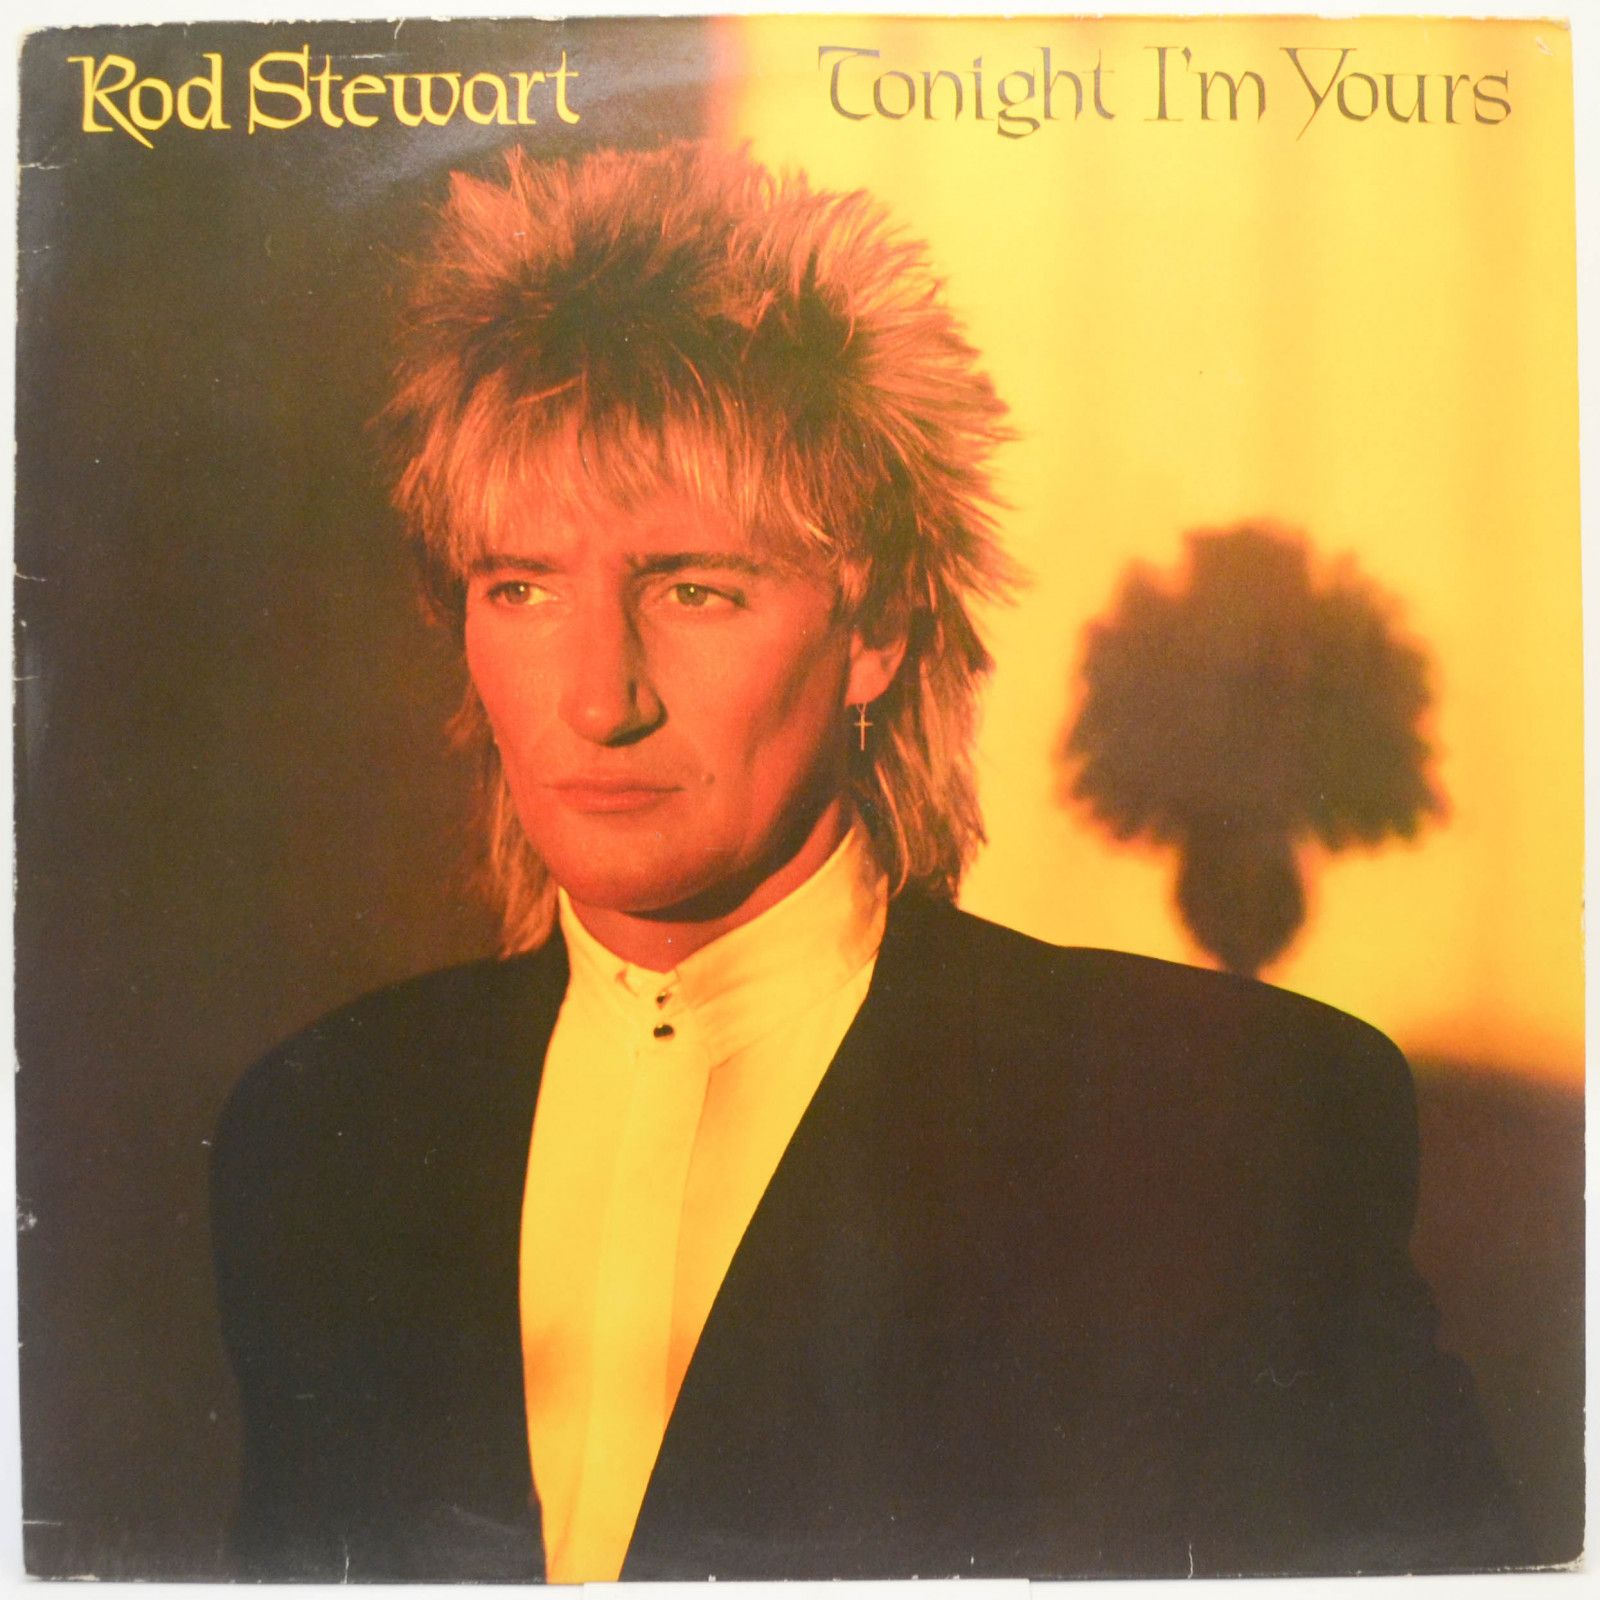 Rod Stewart — Tonight I'm Yours, 1981